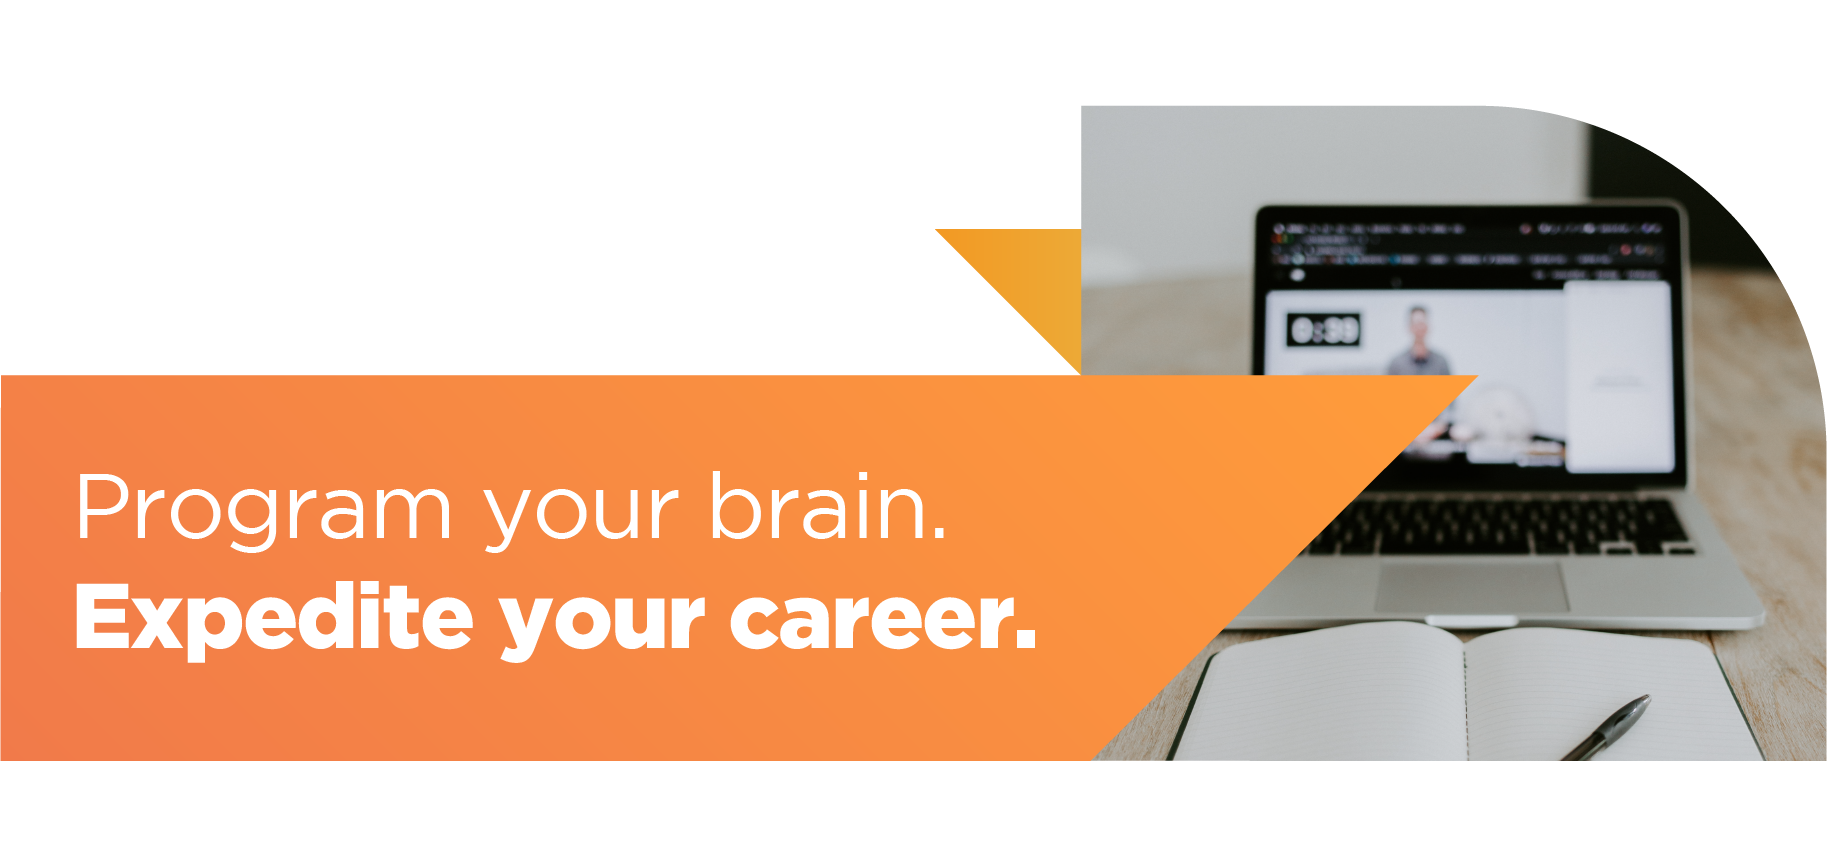 Program your brain, Expedite your career